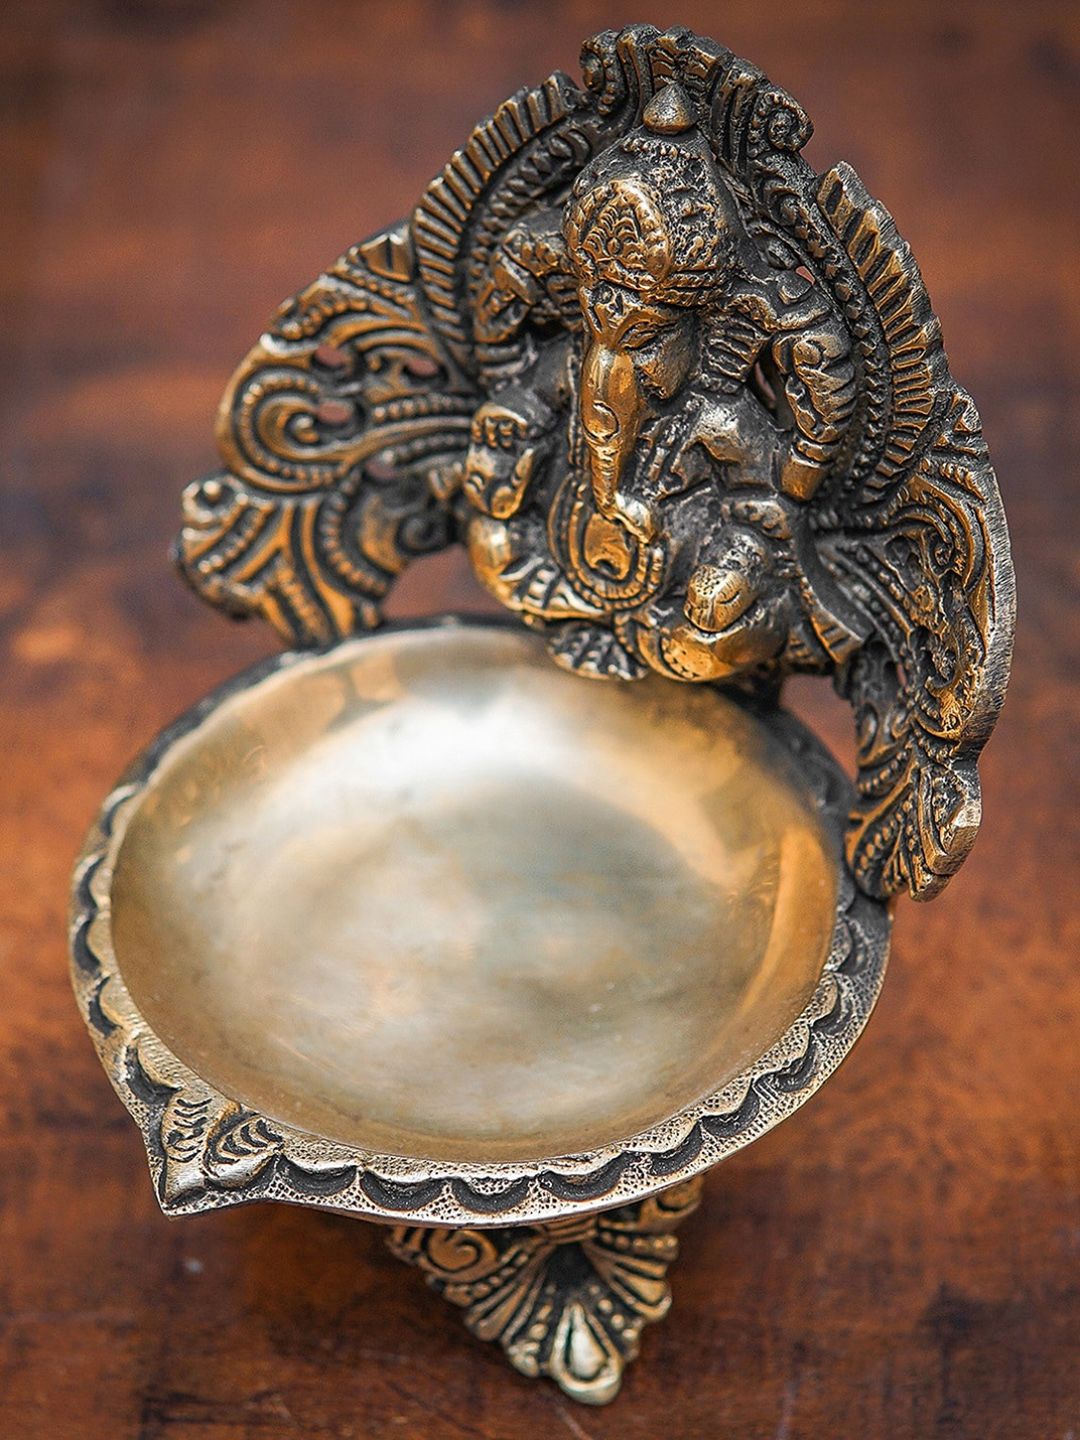 StatueStudio Gold-Toned Ganesha Diya Pooja Essentials Price in India